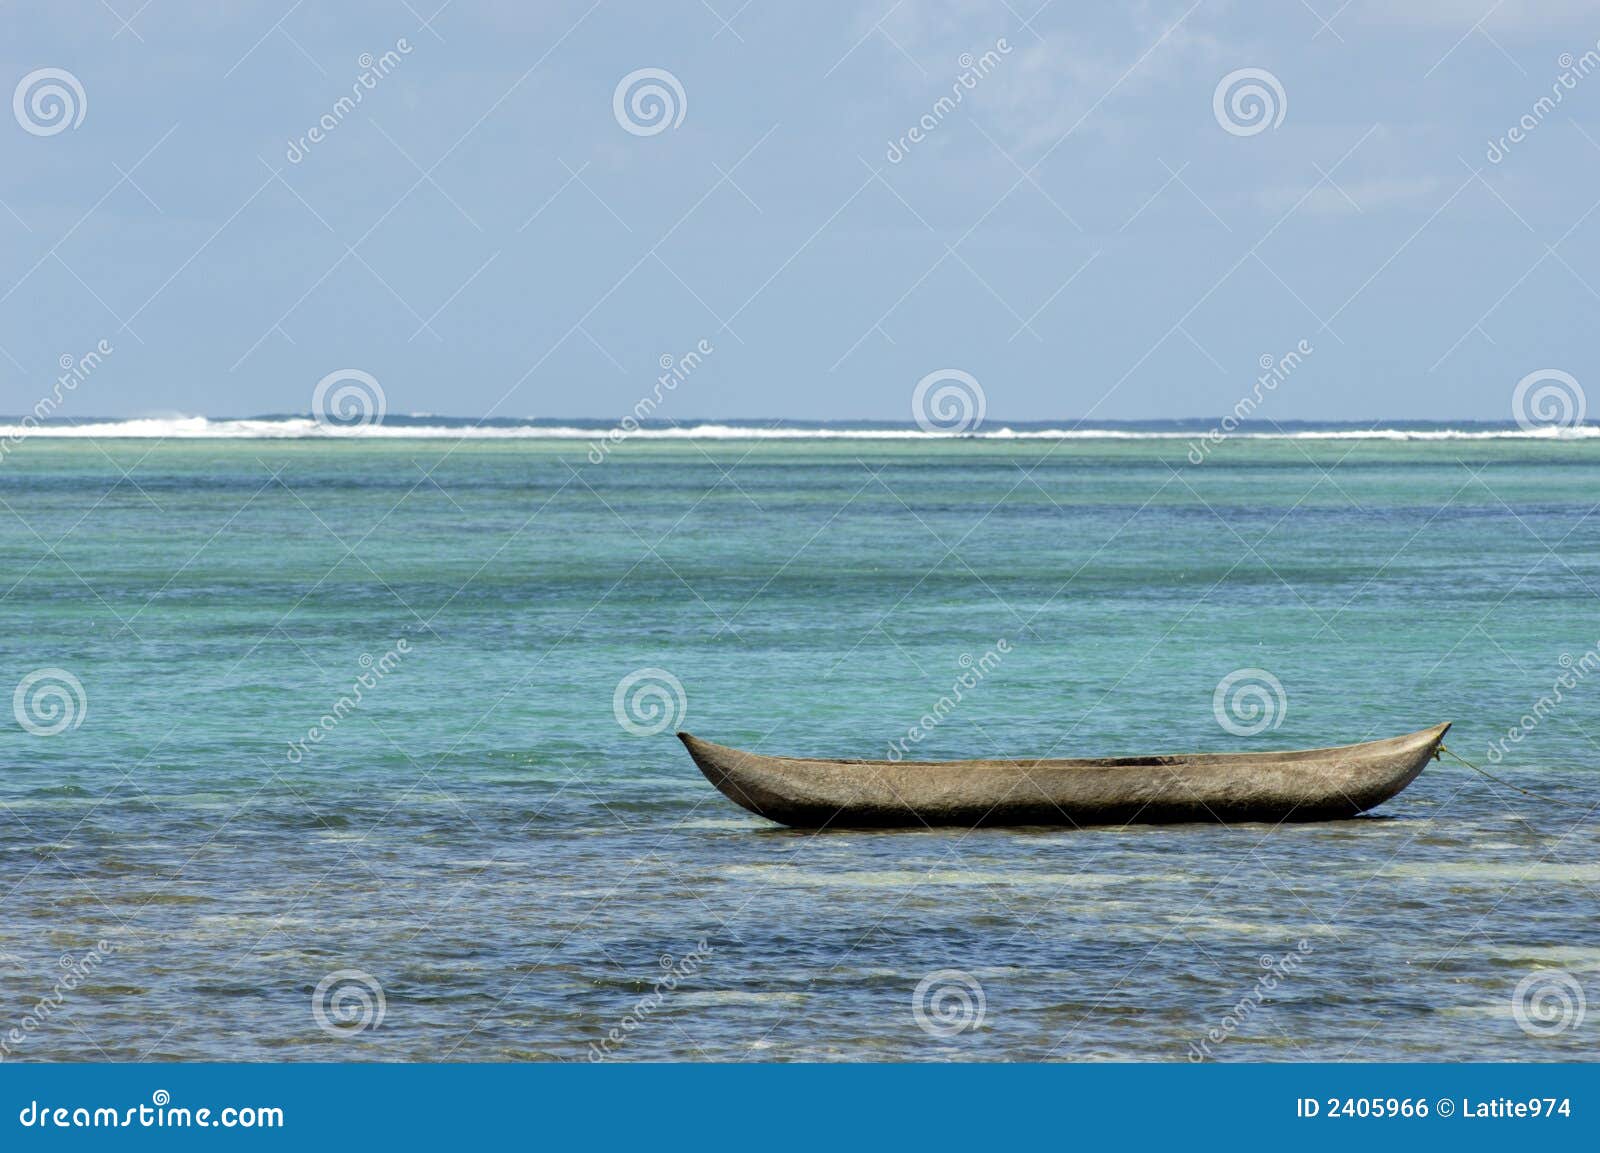 dugout canoe in Madagascar lagoon.